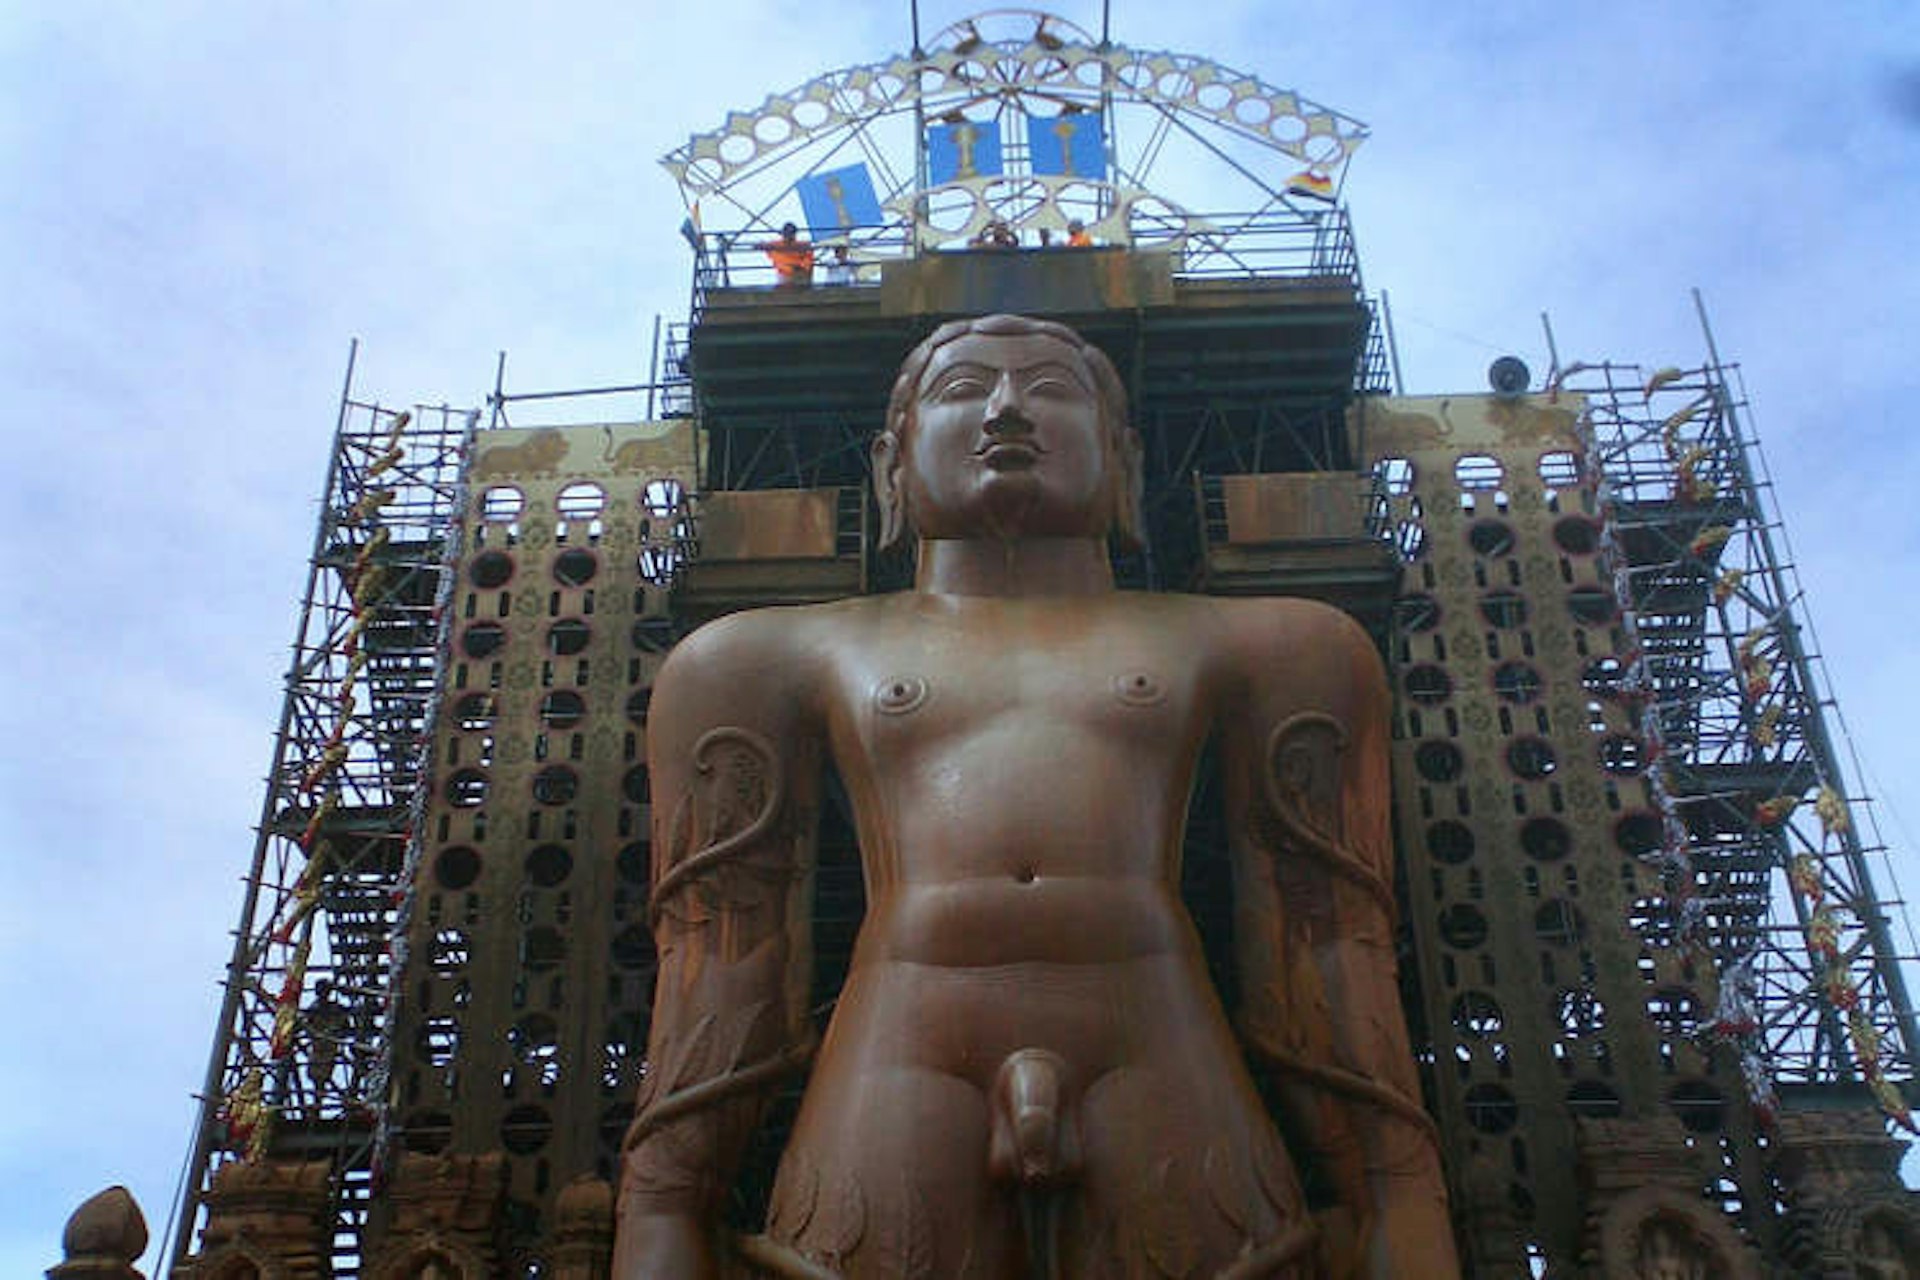 Monumental statue of Gomateshvara, Sravanabelagola. Image by micah craig / CC BY-SA 2.0.